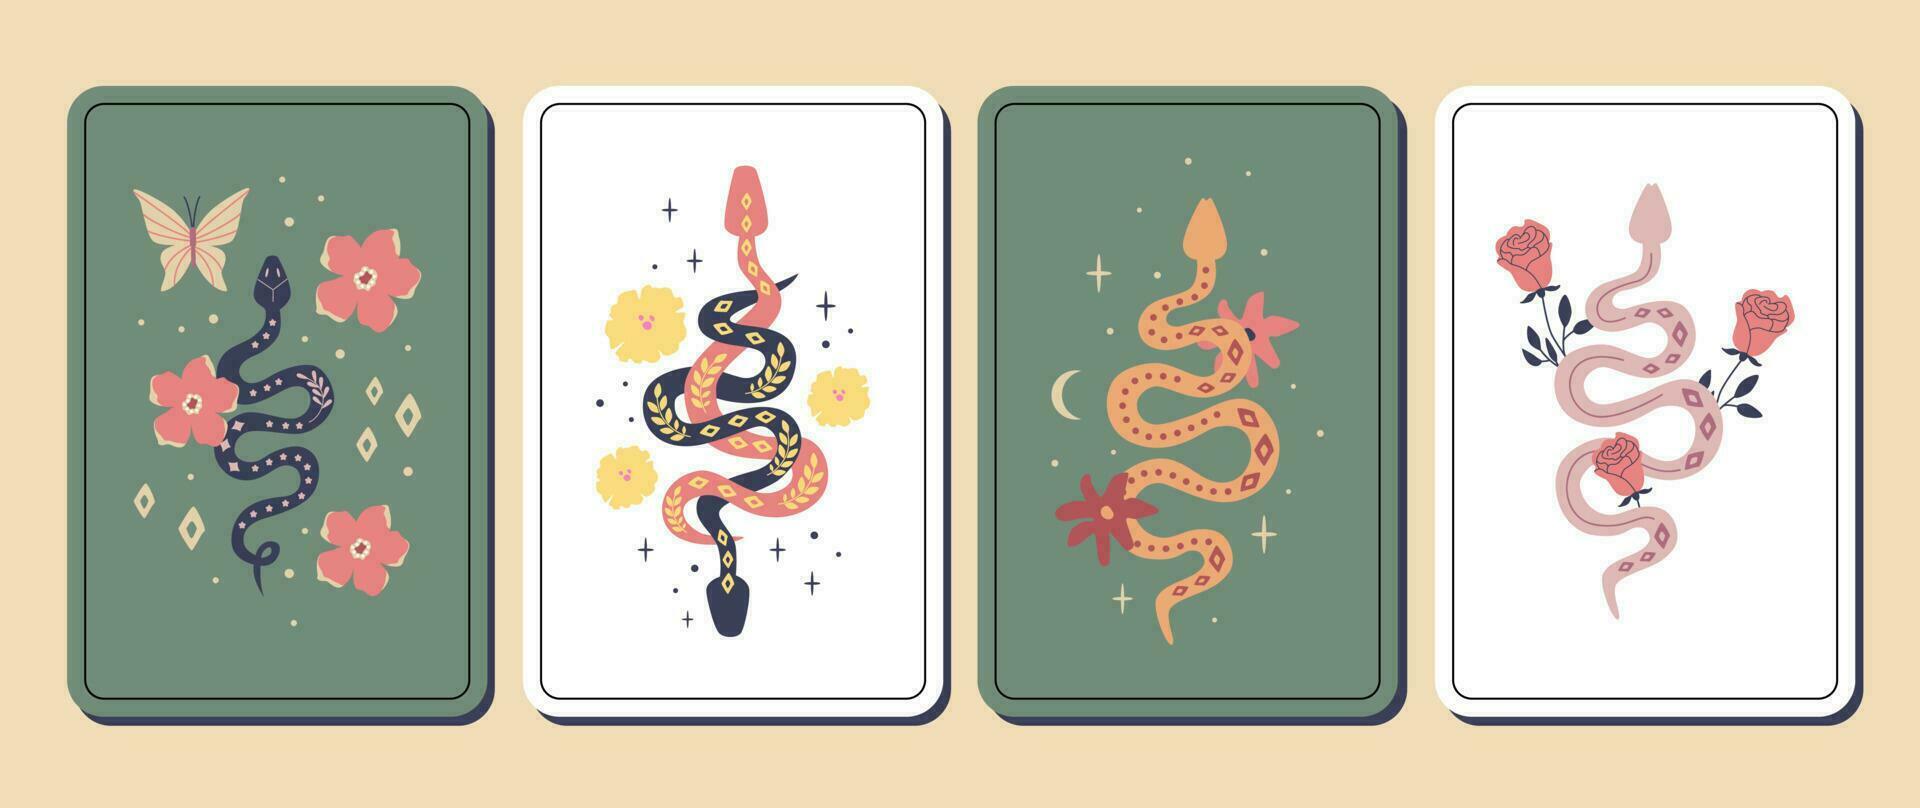 magnifique serpents avec fleurs. la magie sorcière tarot cartes. insectes, céleste symboles. mystique ésotérique symboles. Halloween. vecteur